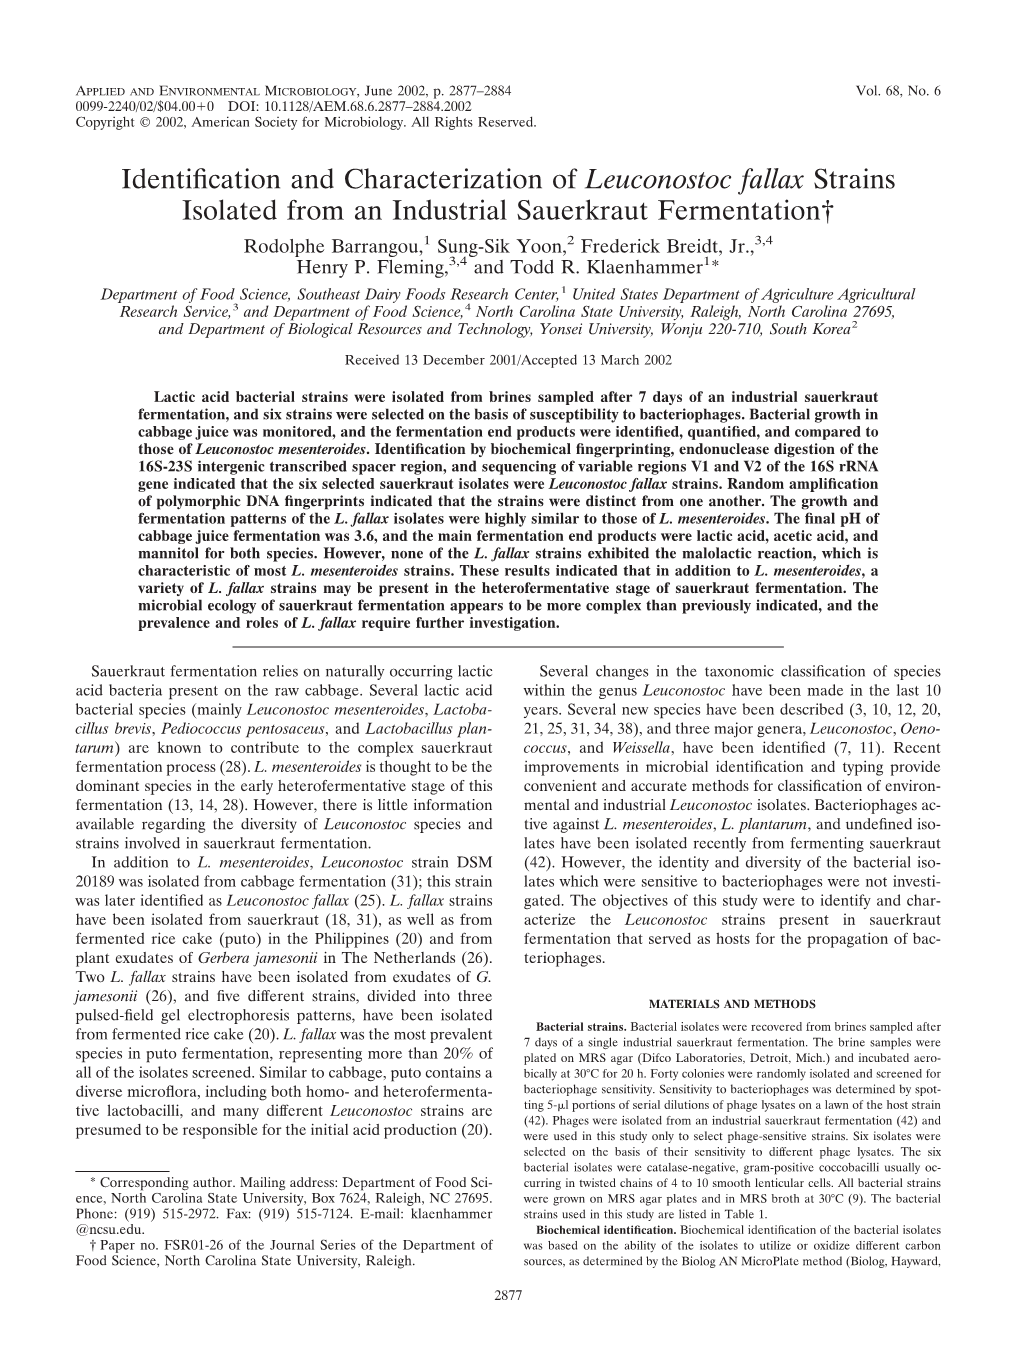 Identification and Characterization of Leuconostoc Fallax